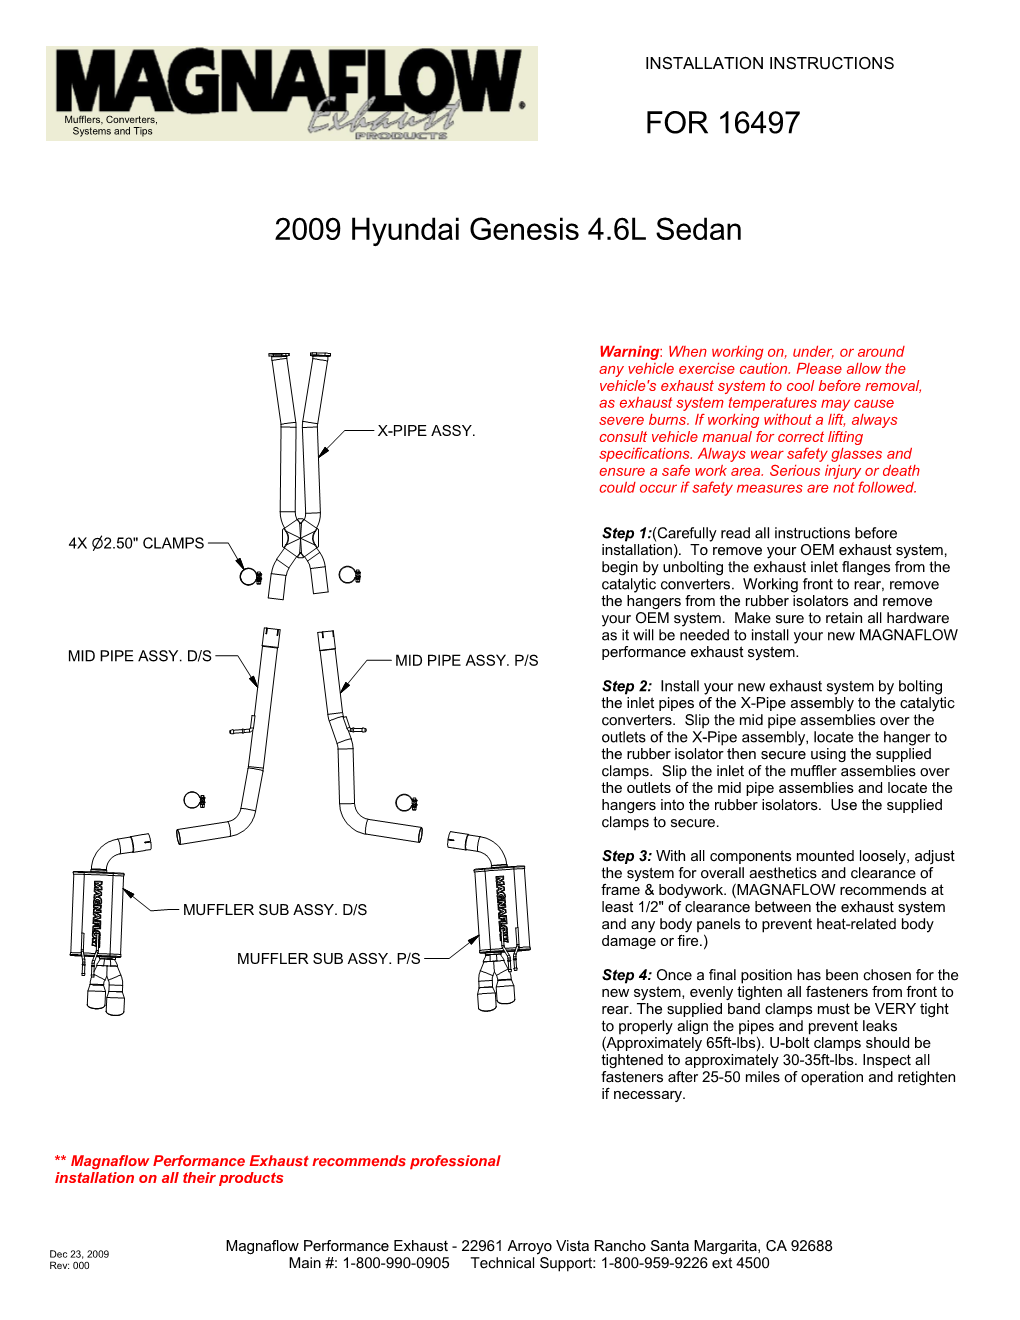 2009 Hyundai Genesis 4.6L Sedan for 16497